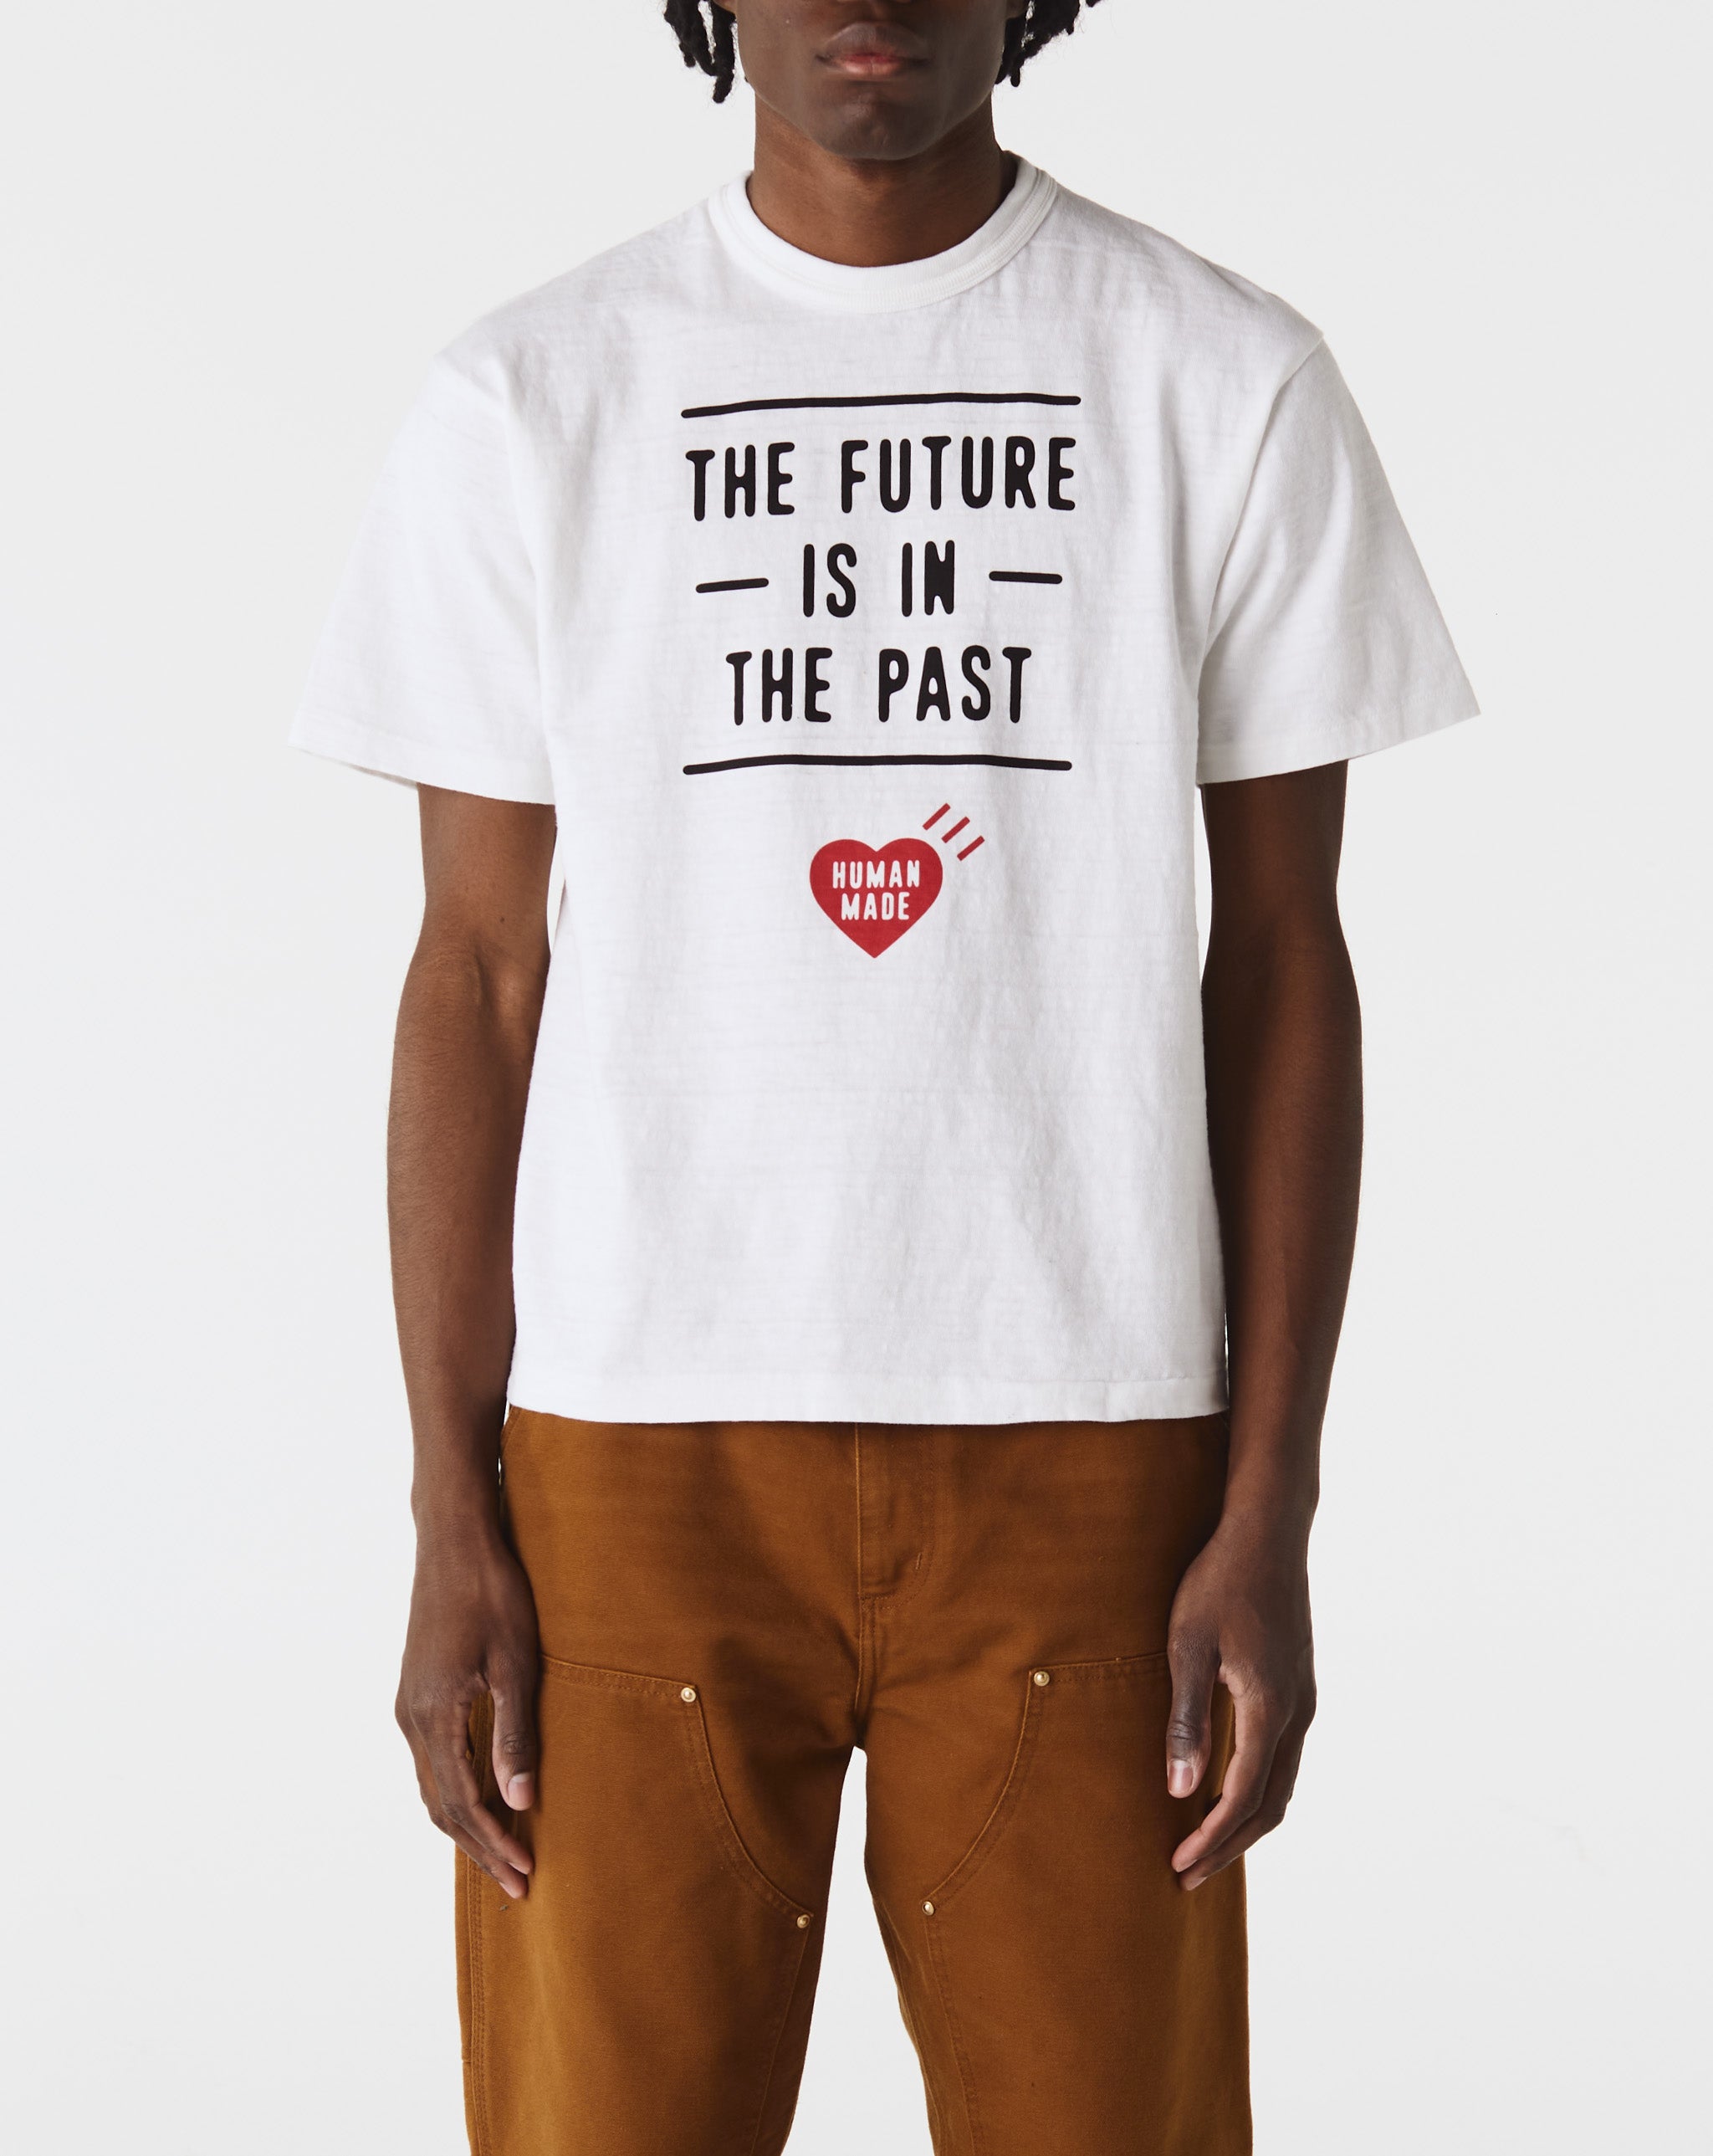 Human Made Graphic T-Shirt #03  - Cheap Cerbe Jordan outlet